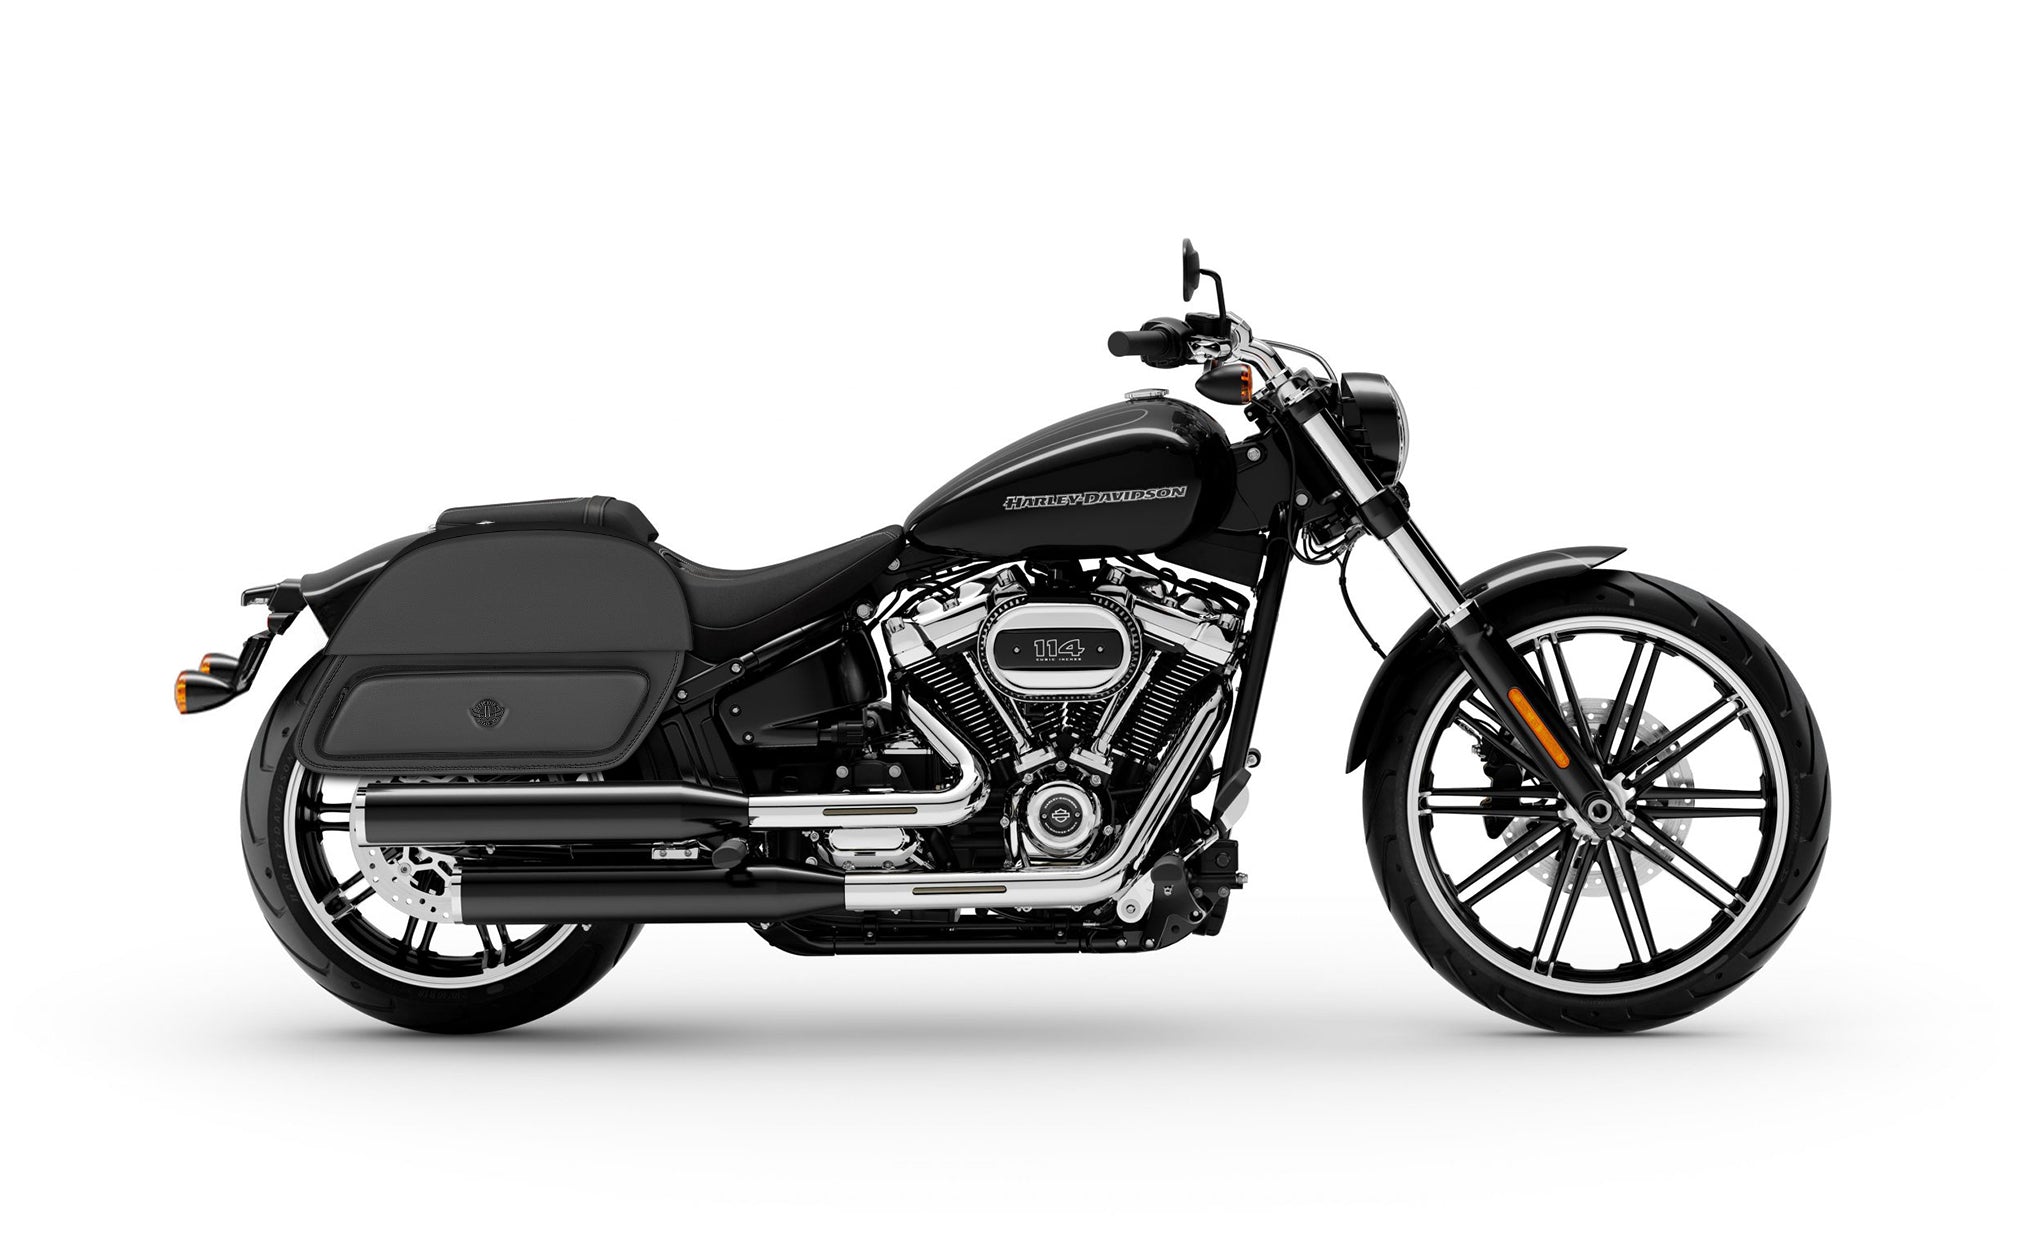 33L - Pantheon Large Motorcycle Saddlebags for Harley Davidson Softail Breakout 114 FXBR/S on Bike Photo @expand